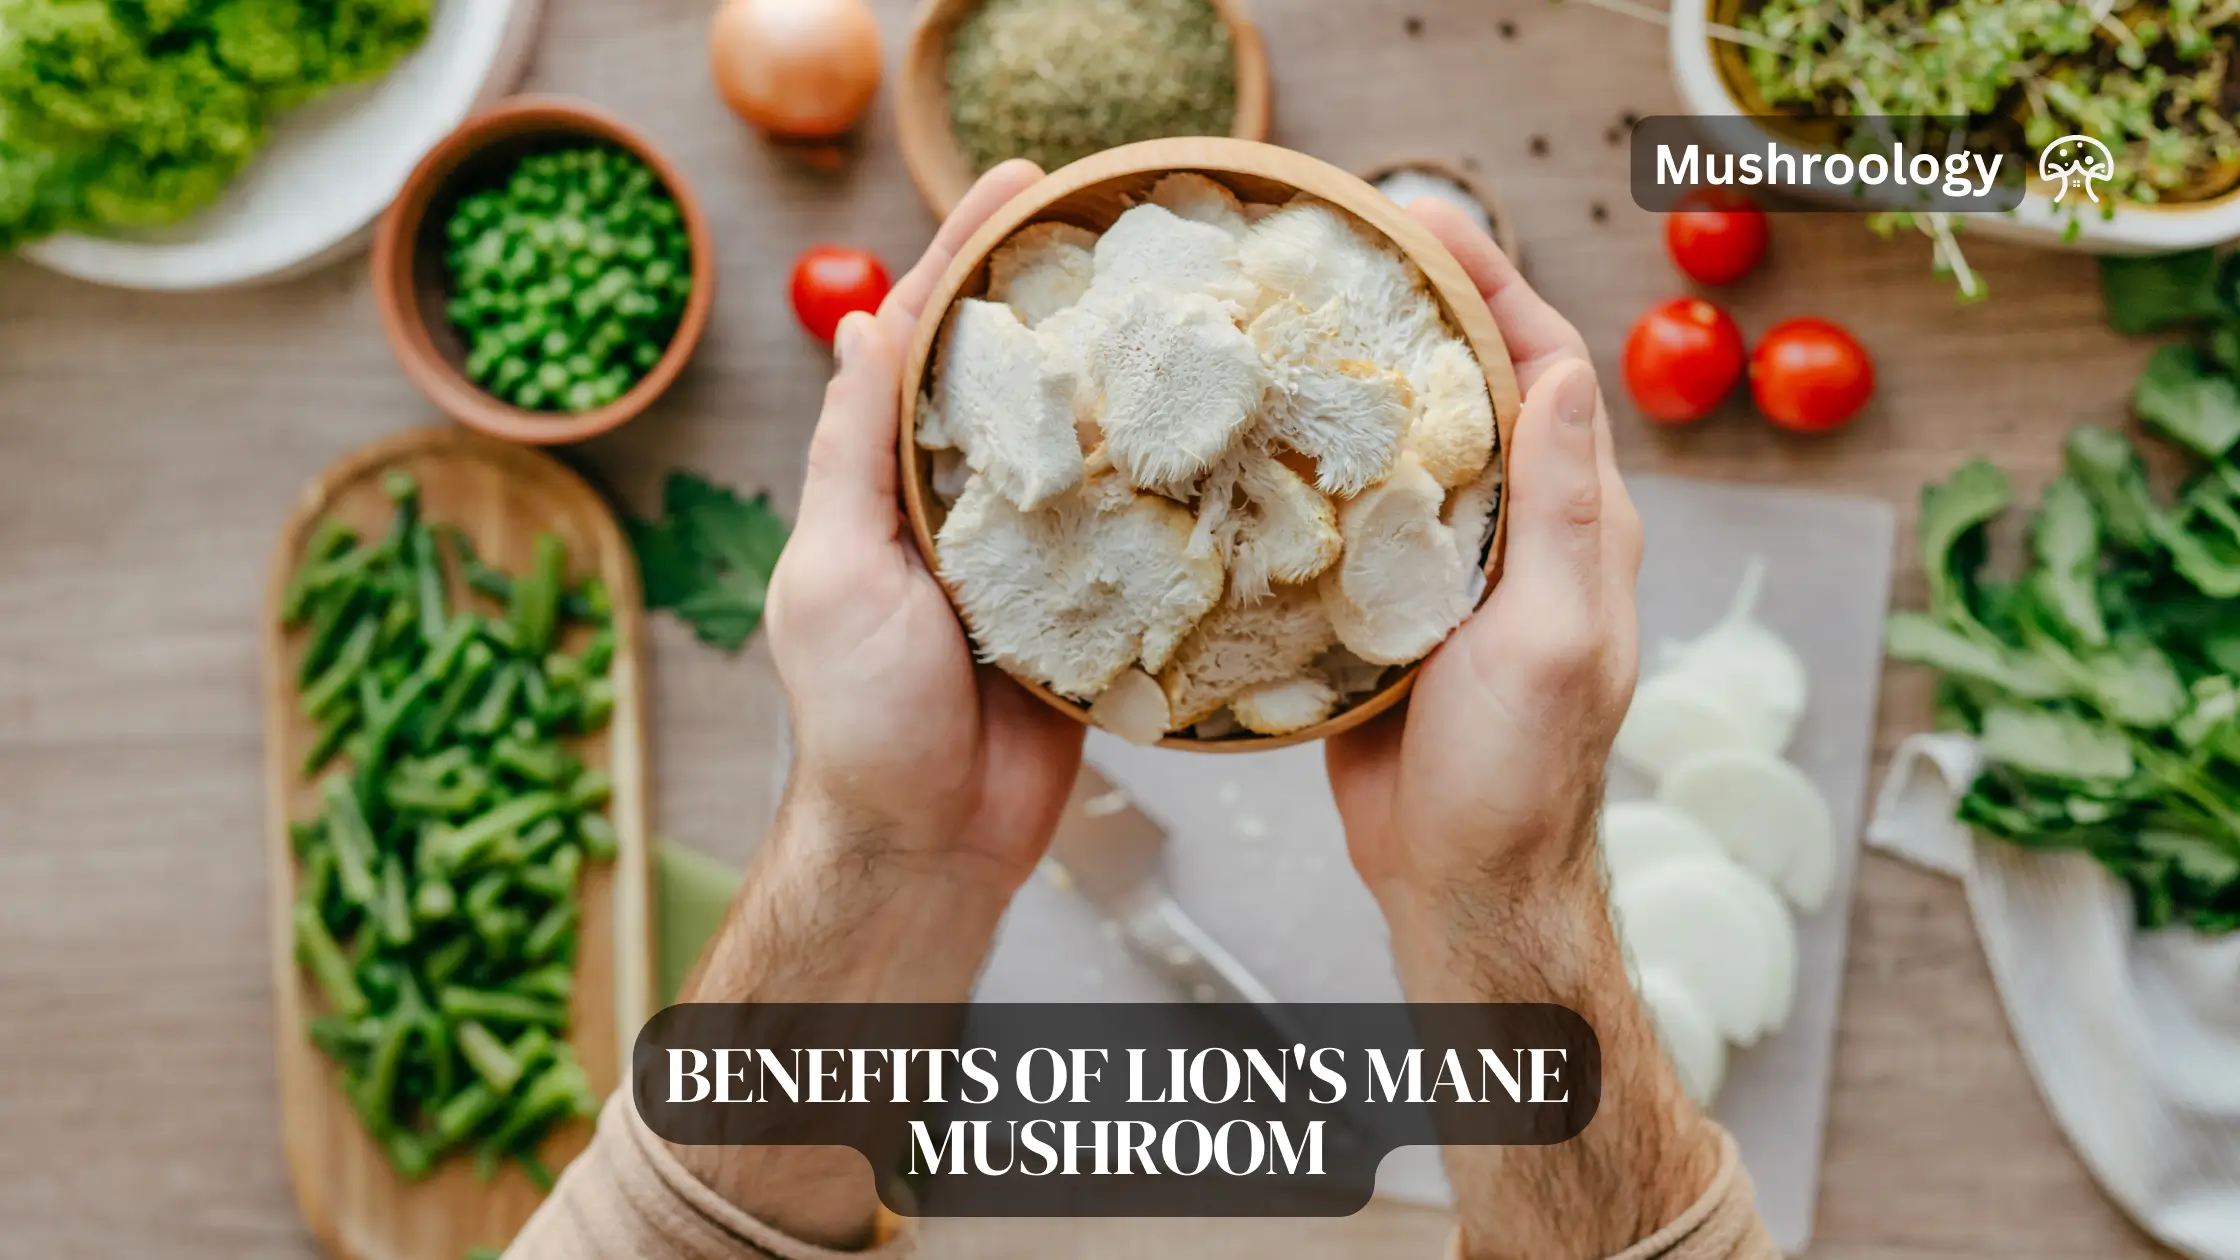 Lions Mane mushroom benefits